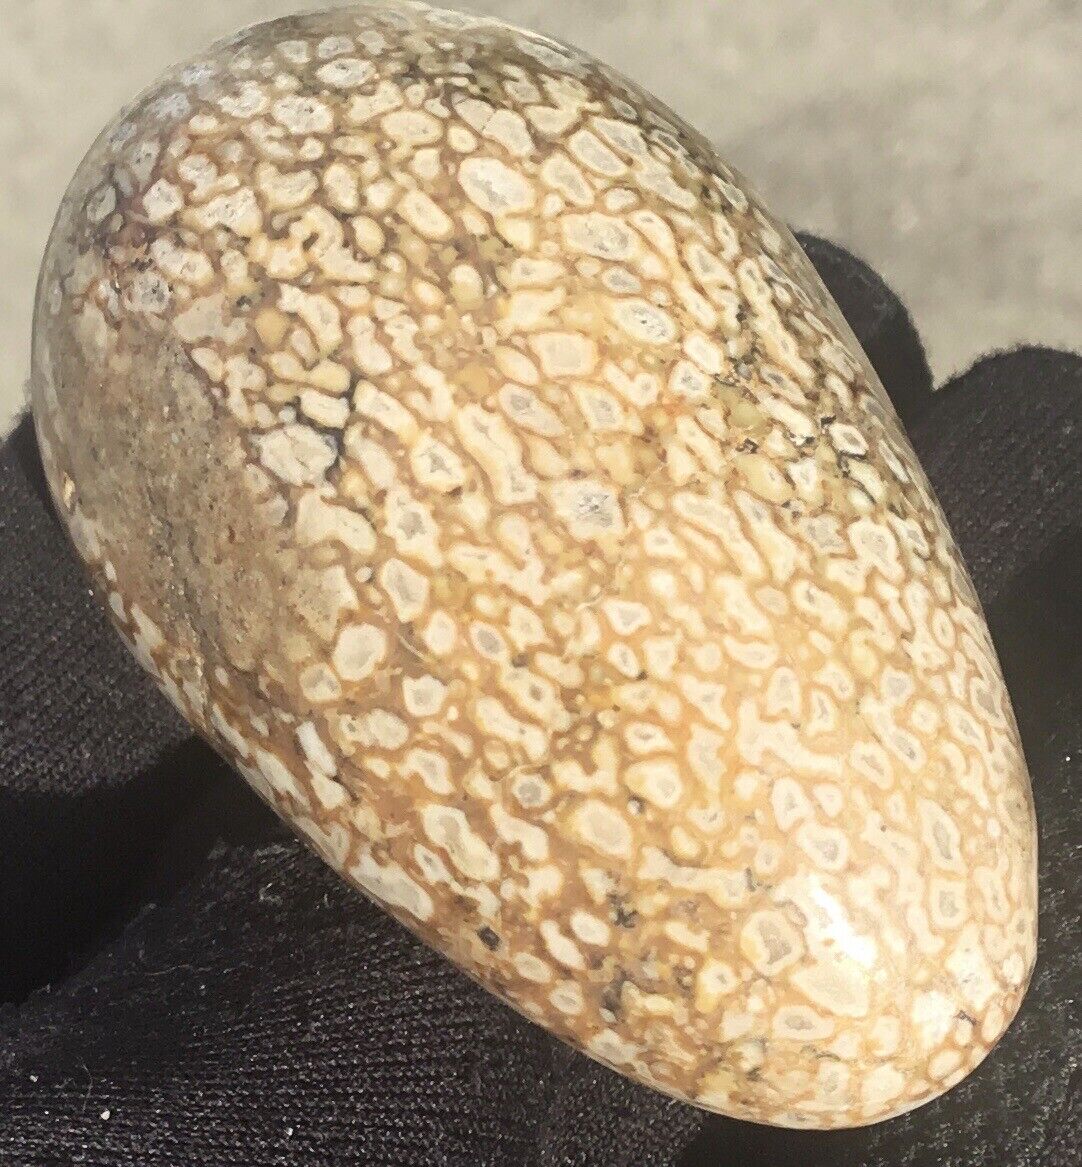 4 Oz Polished Agatized Dinosaur Bone Egg Palm Stone Display Piece Fossil